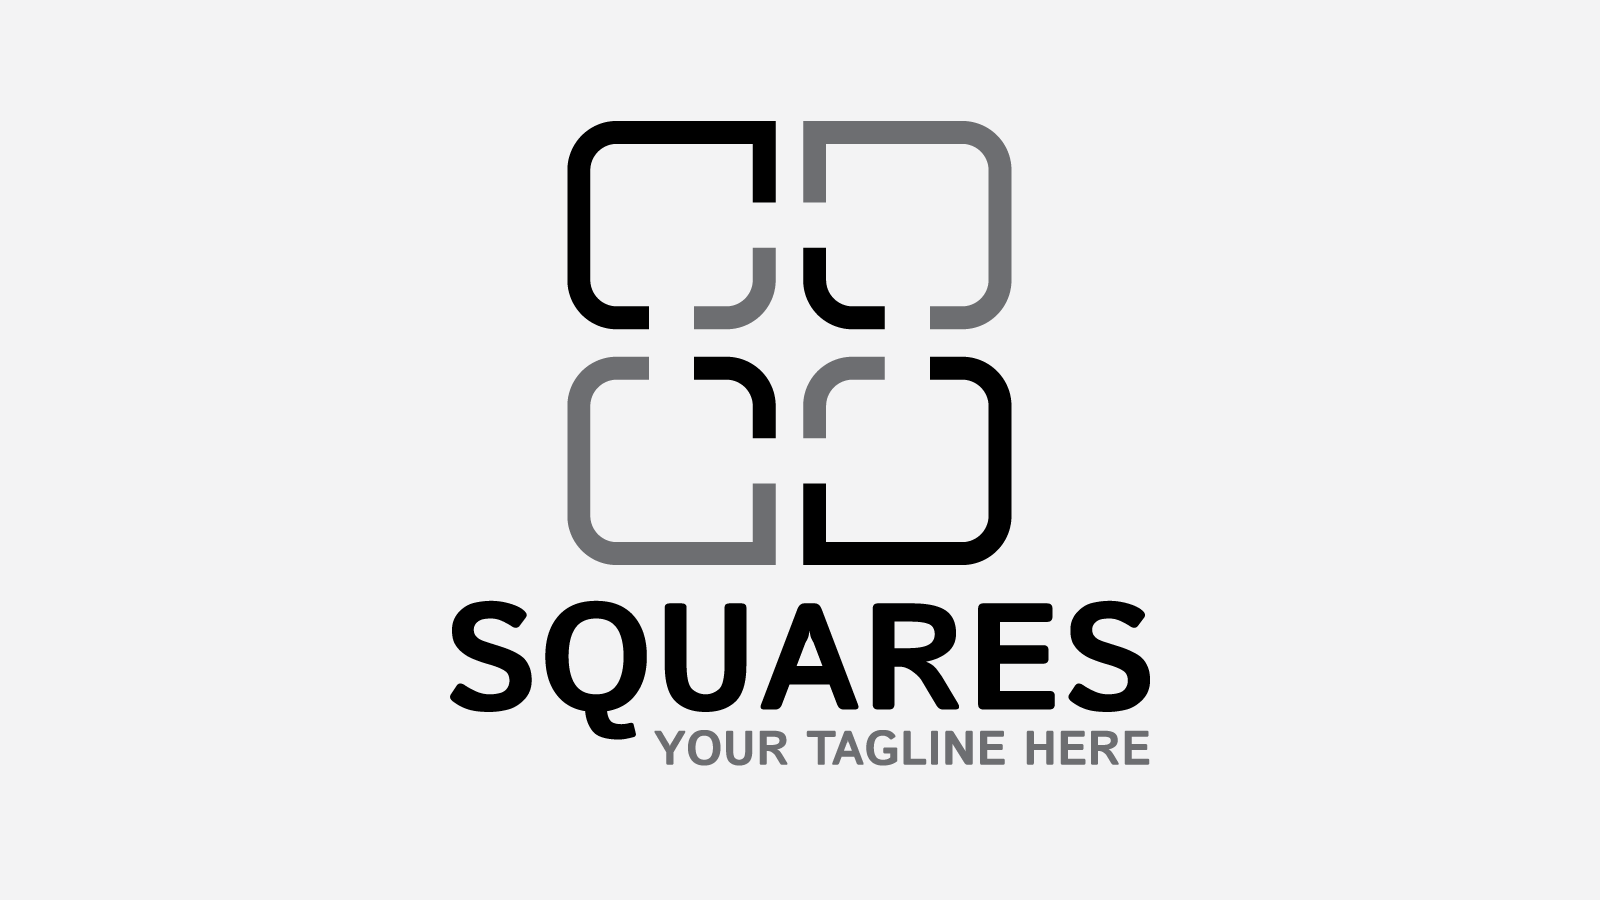 Google Squares Logo - SQUARES free logo design | Zfreegraphic: Free vector logo downloads